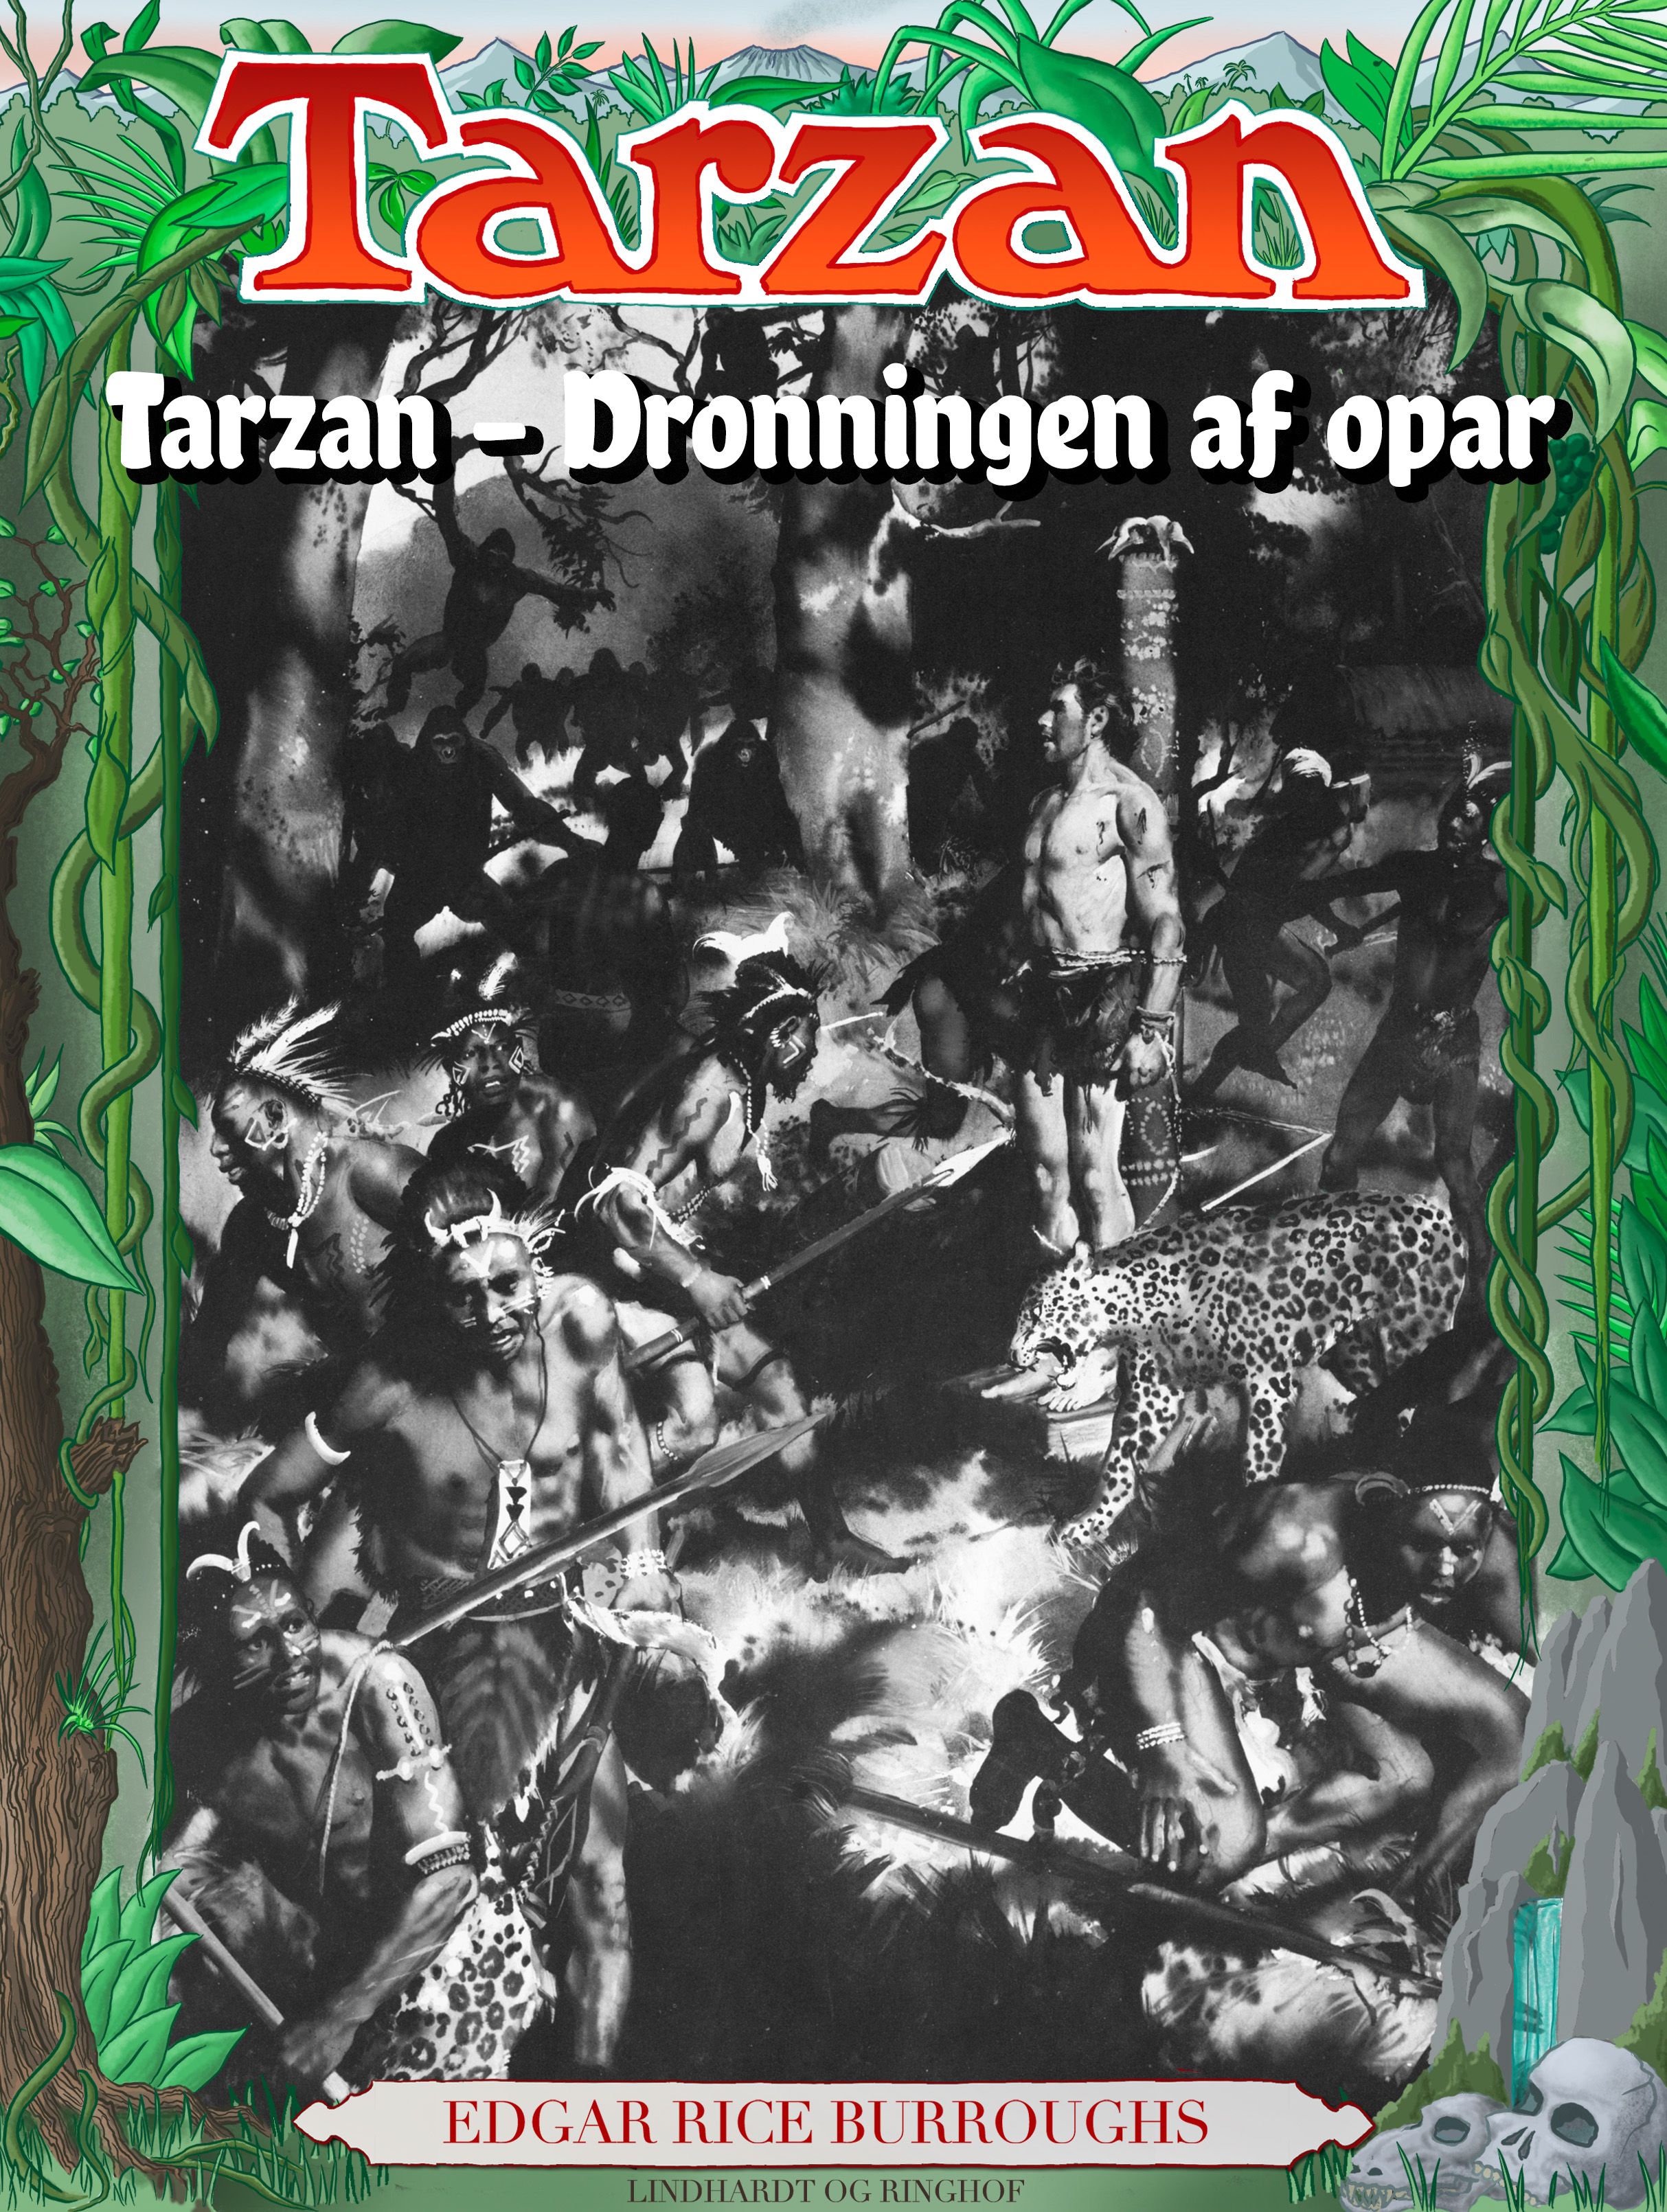 Tarzan - Dronningen af opar, e-bok av Edgar Rice Burroughs